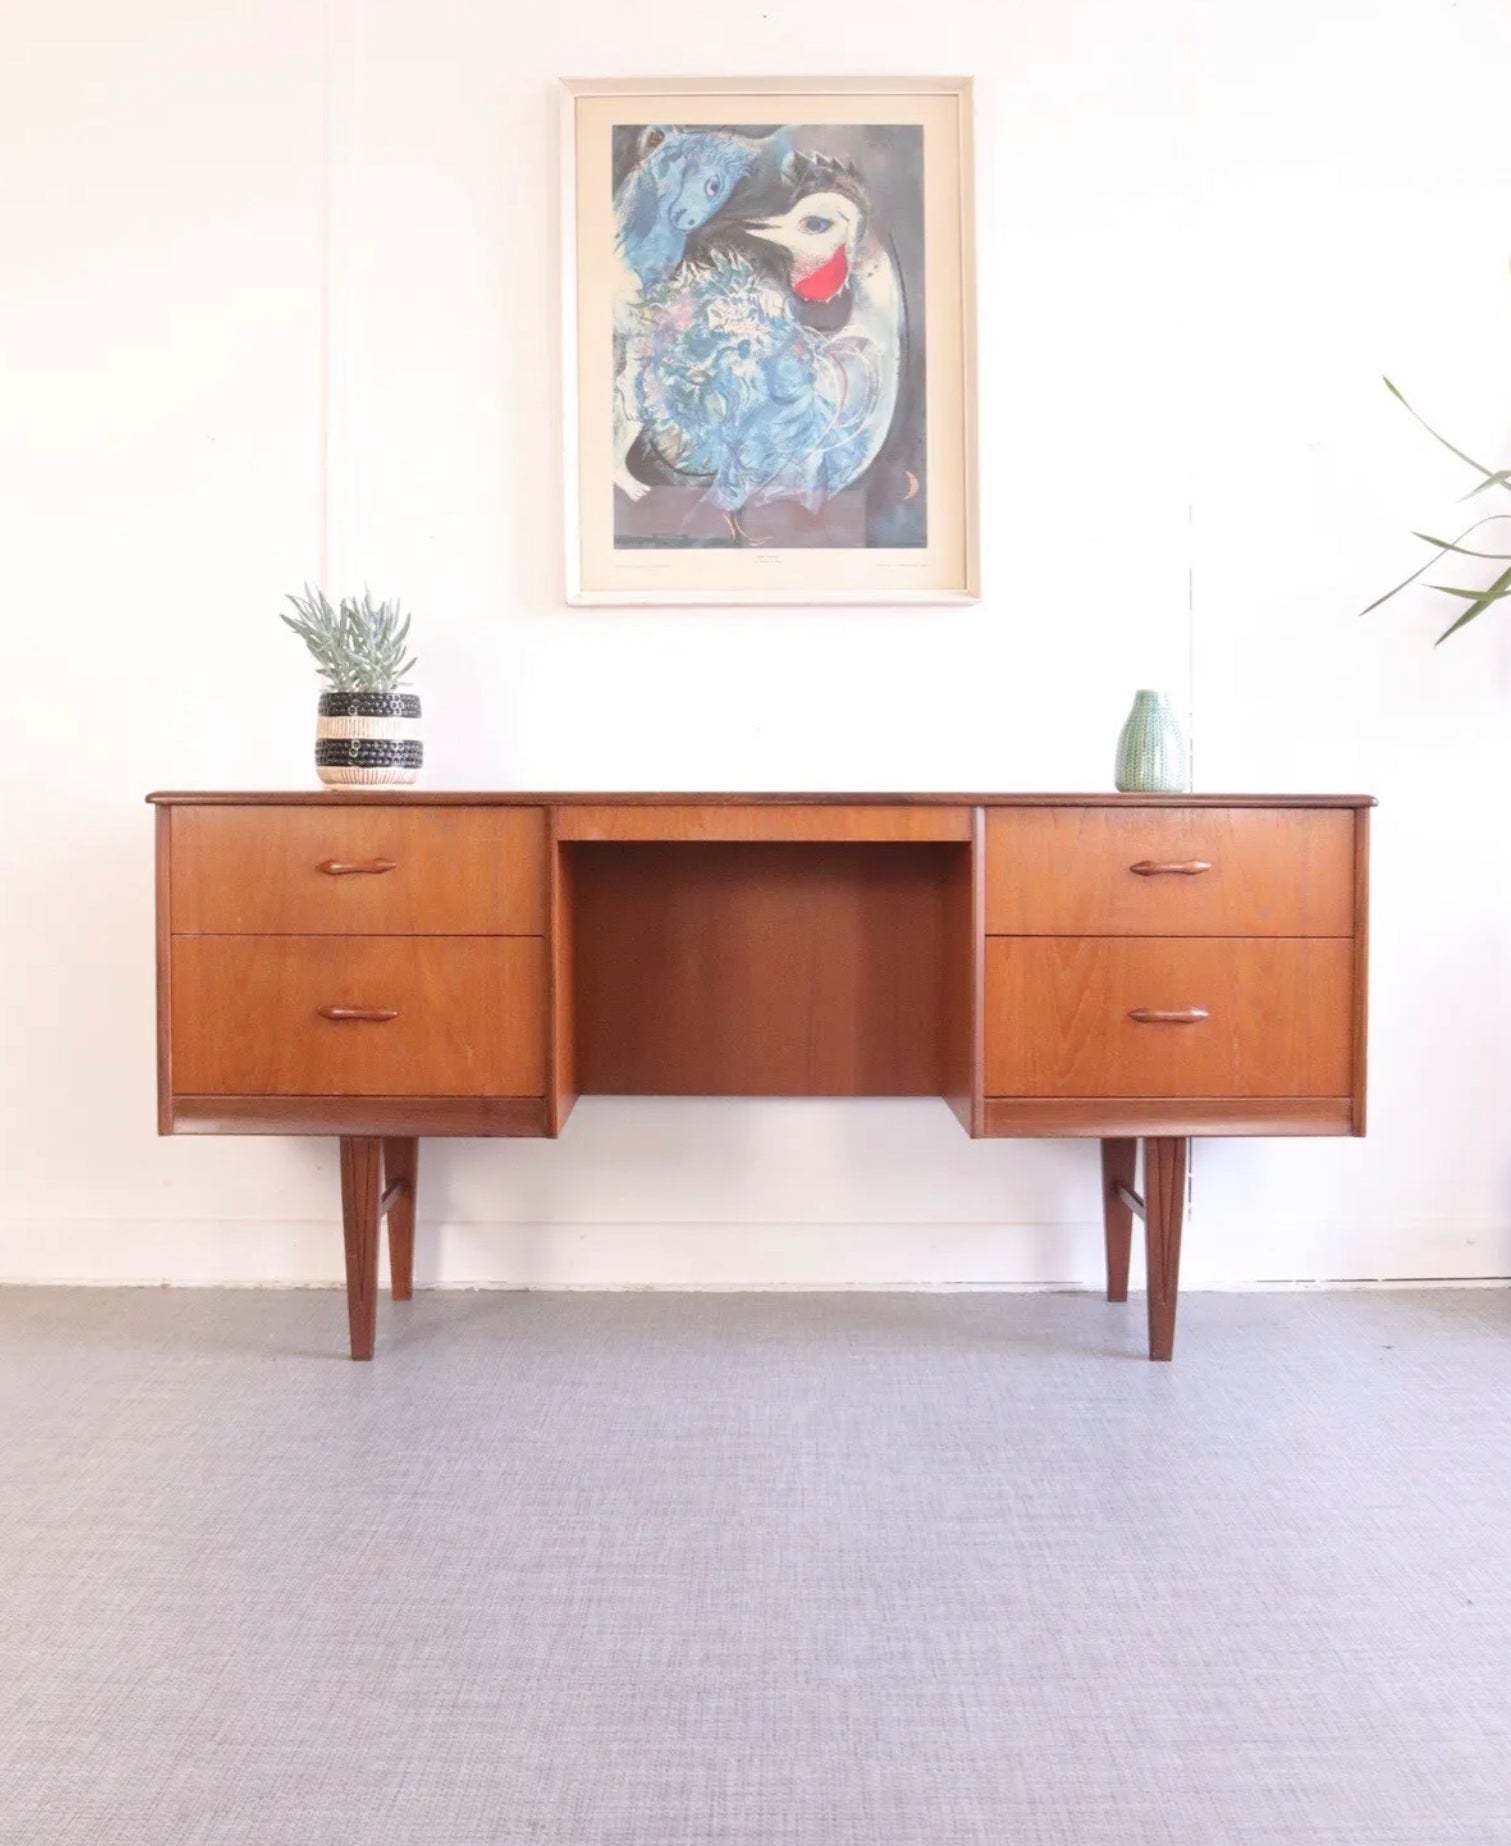 Homeworthy Mid Century Teak Vintage Desk /Home Office Retro Danish Style - teakyfinders